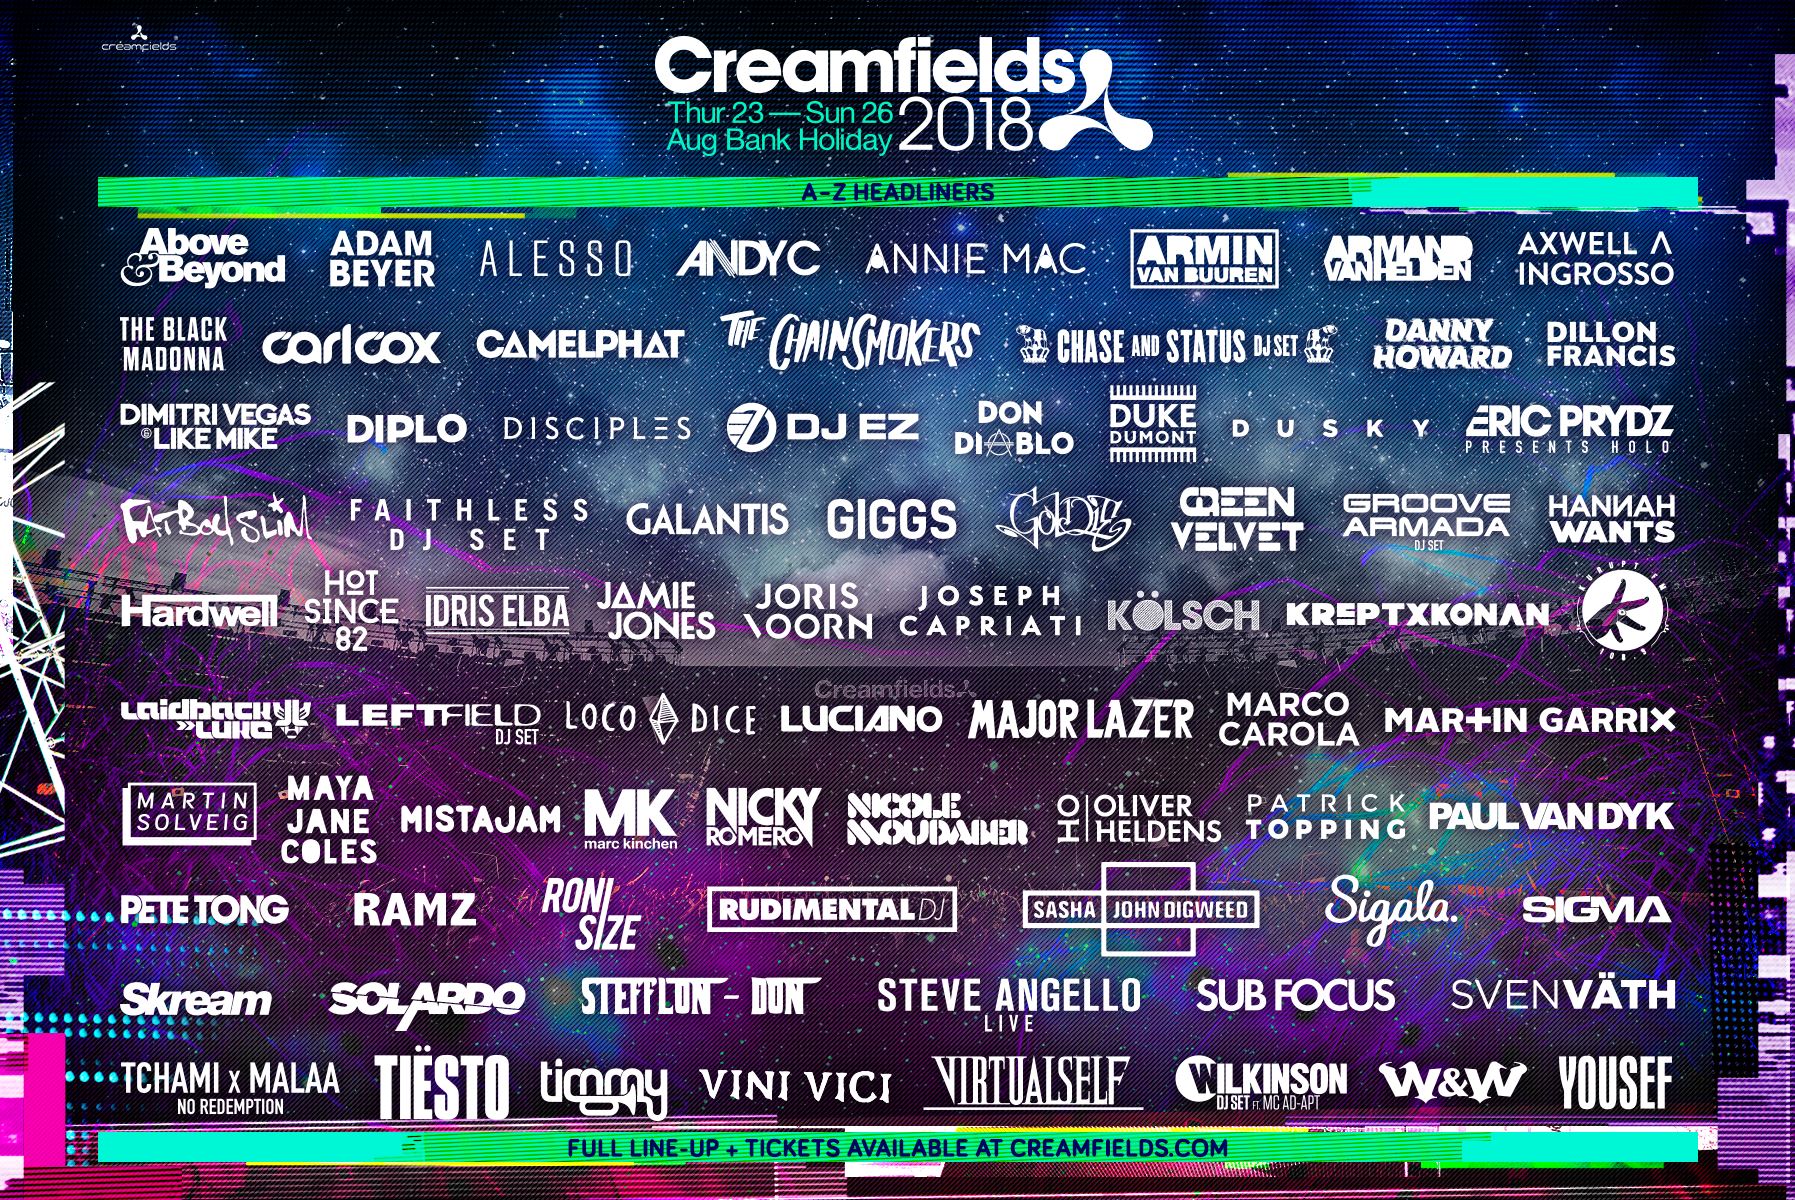 Creamfields 2018 lineup poster